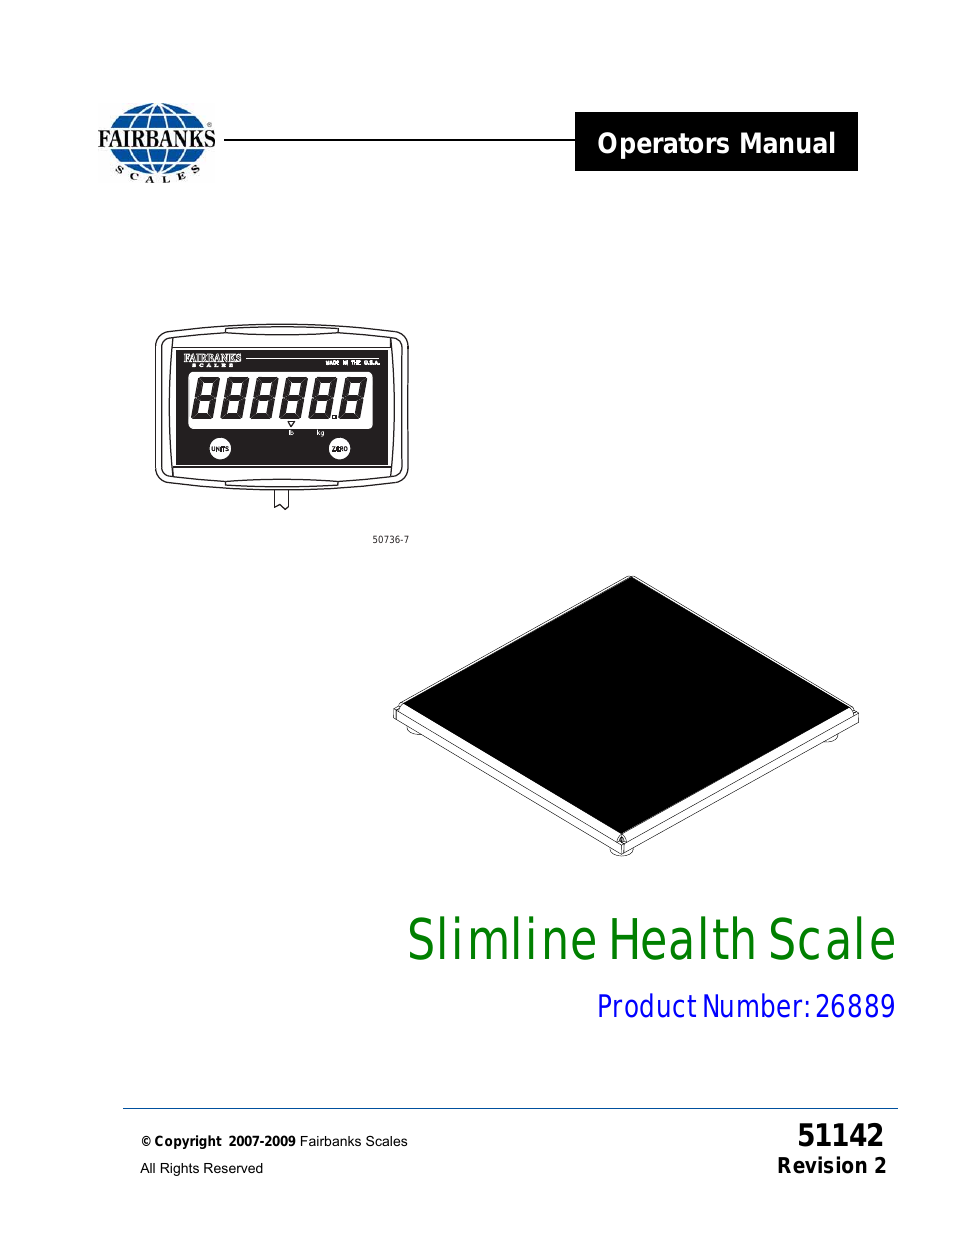 26889 Slimline Health Scale